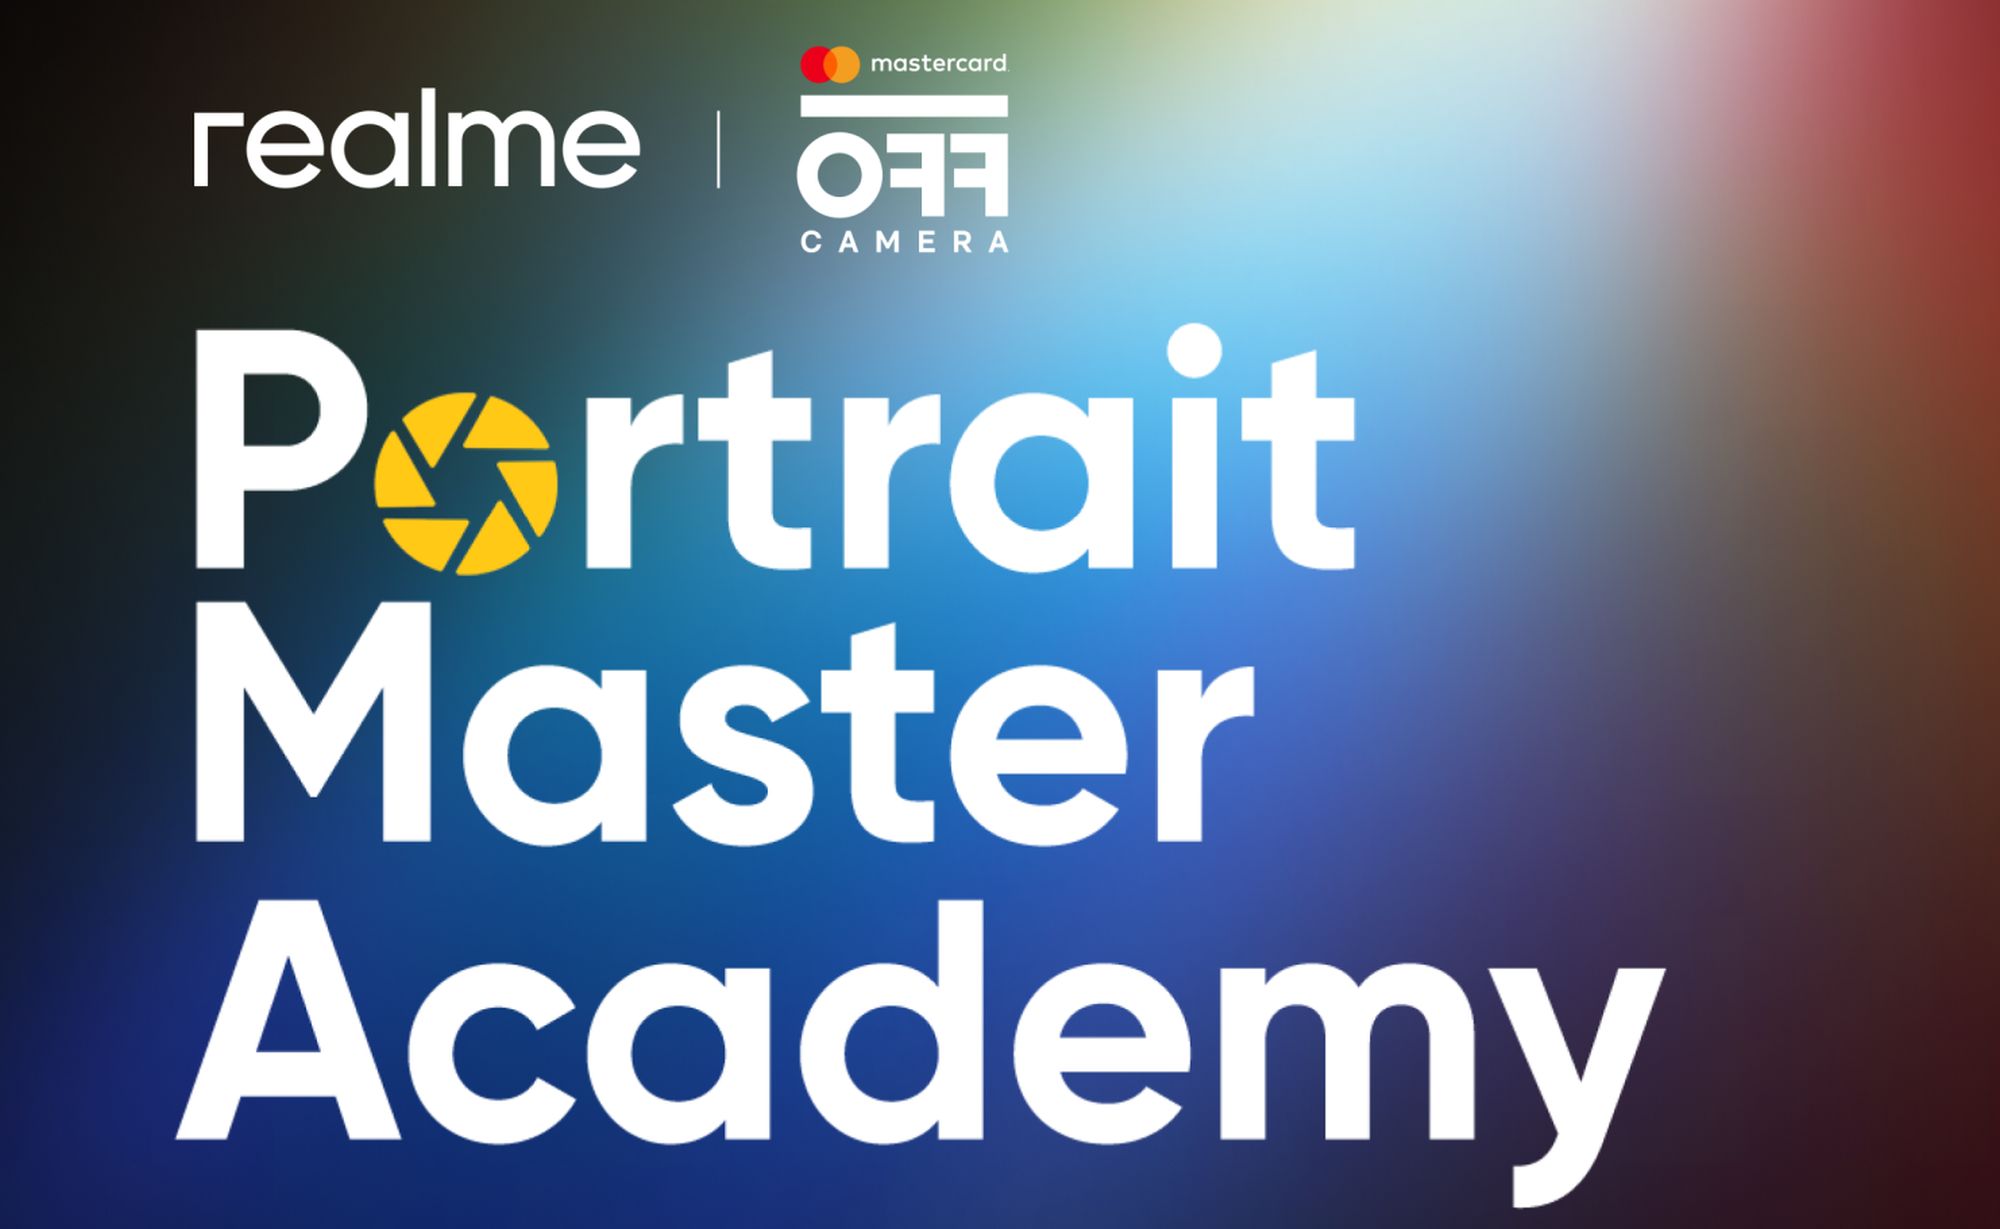 realme Portrait Master Academy